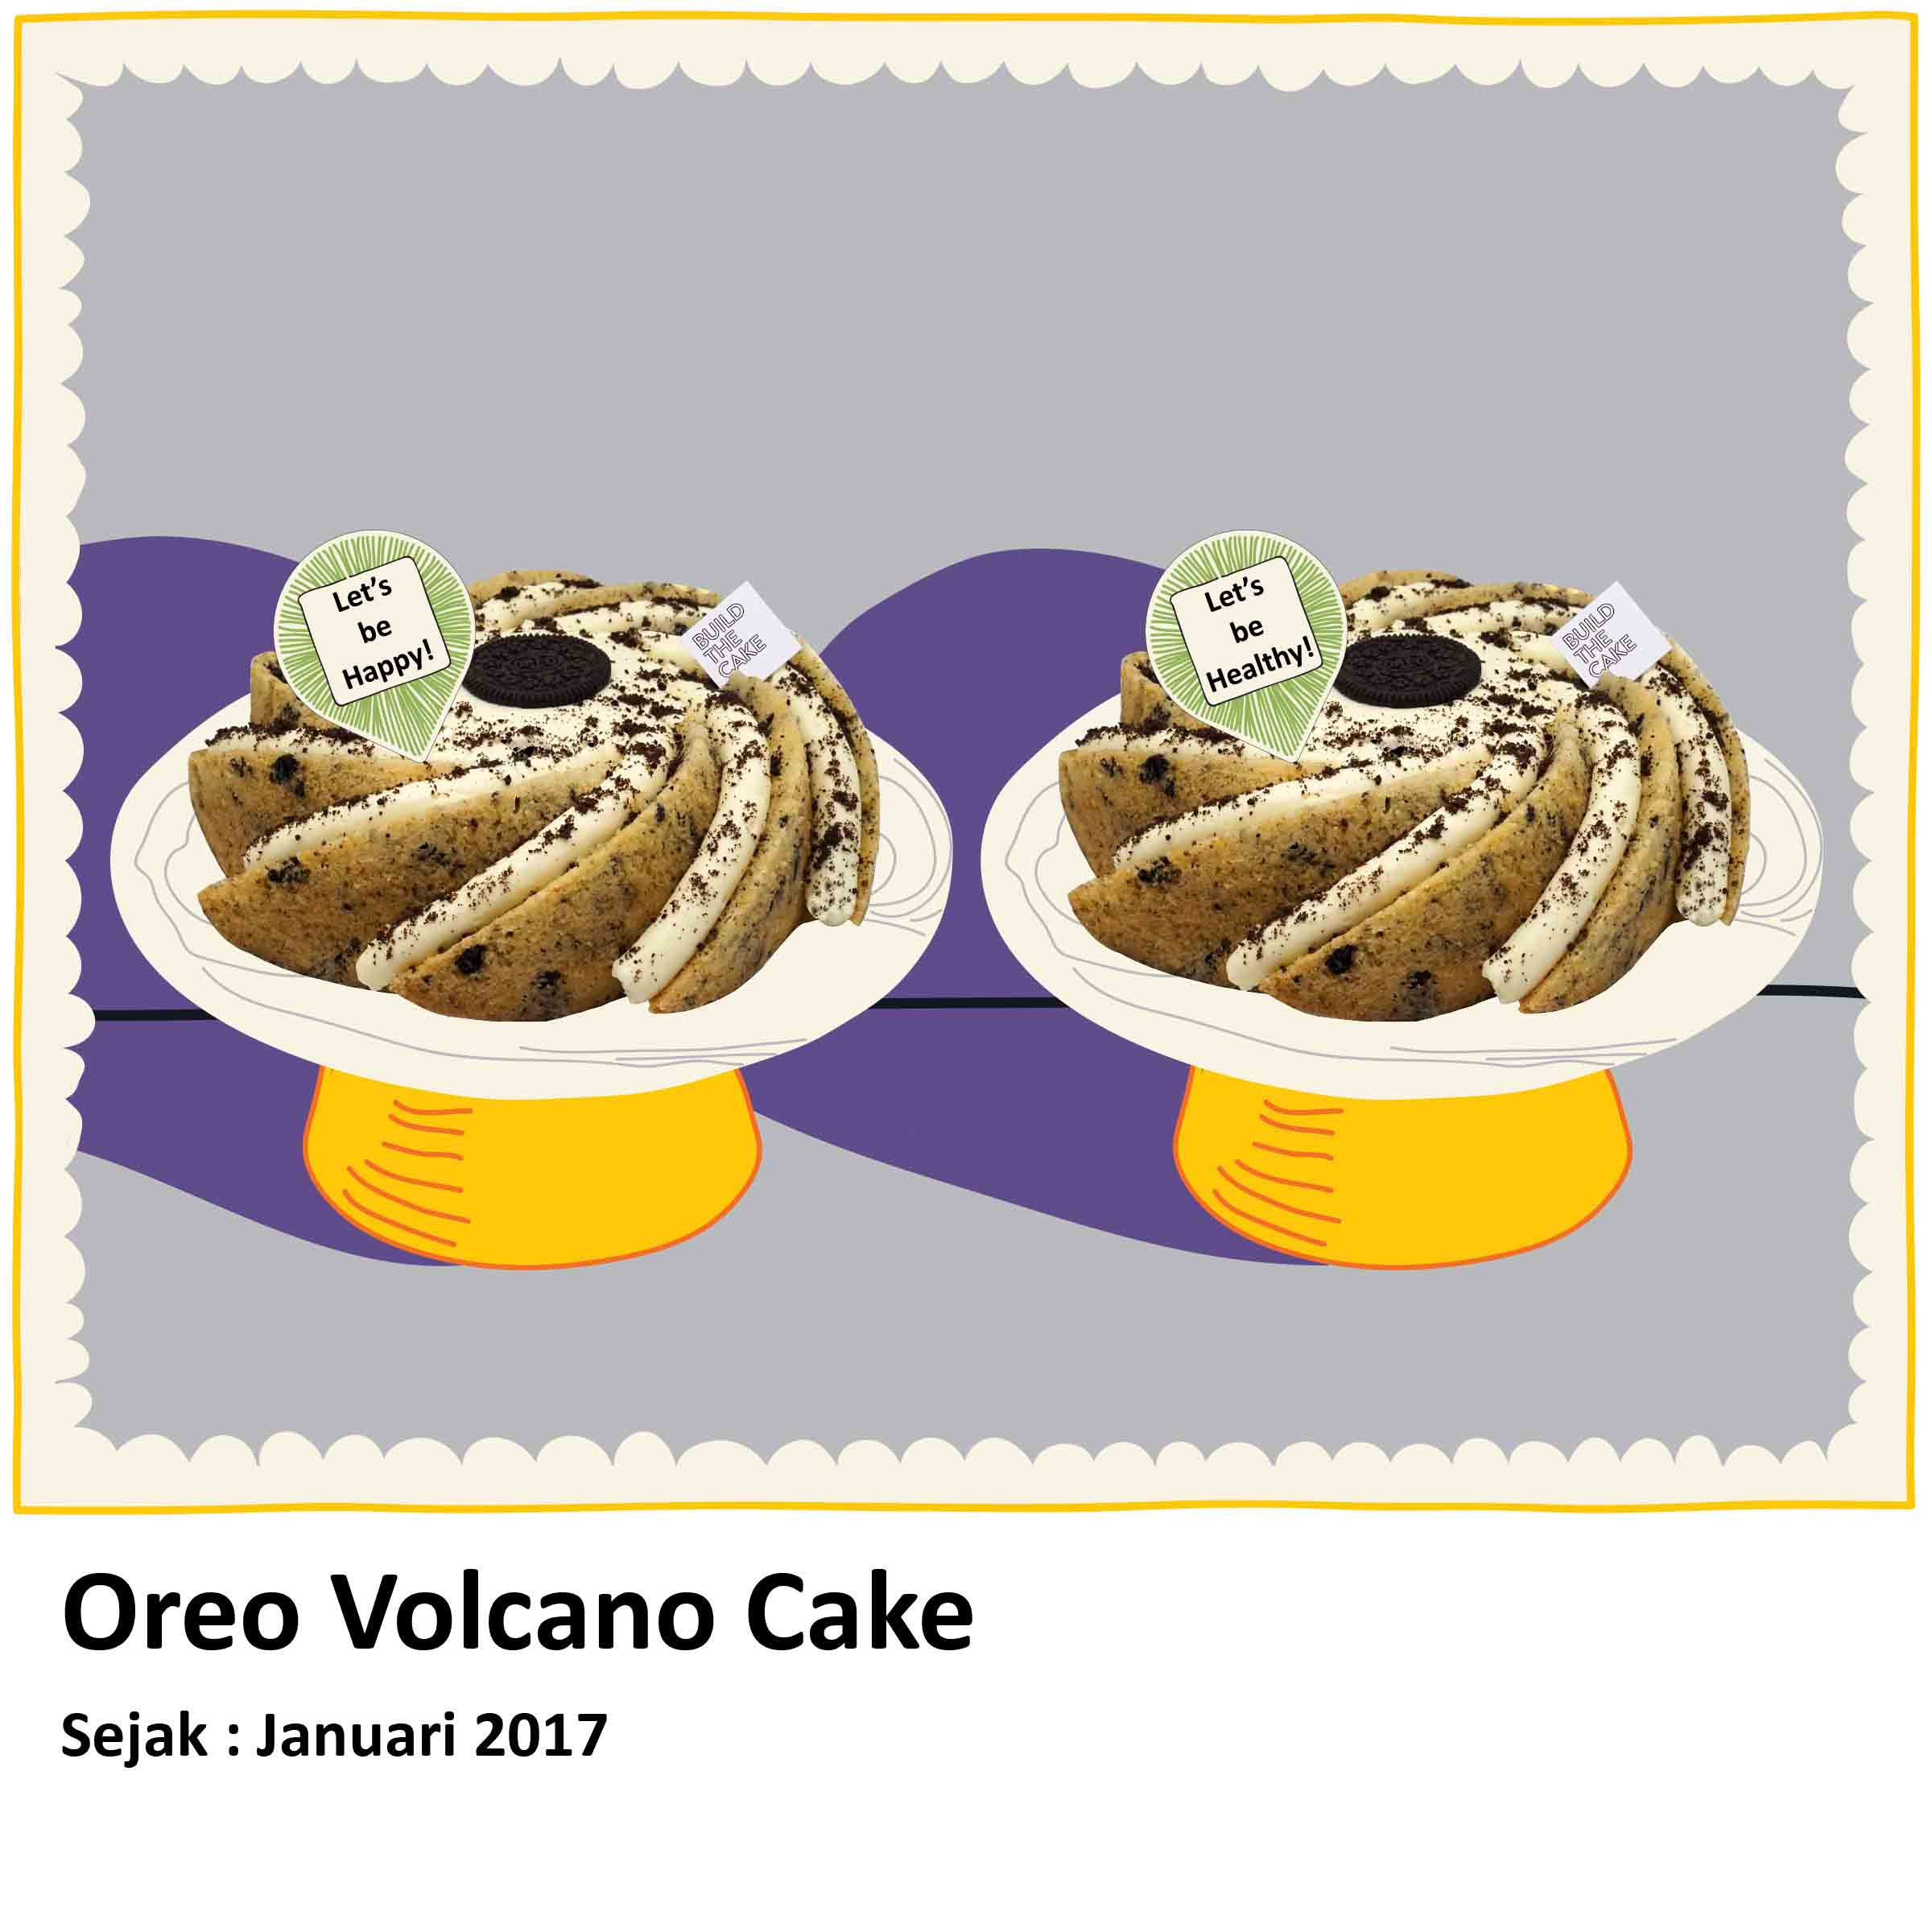 Oreo Volcano Cake